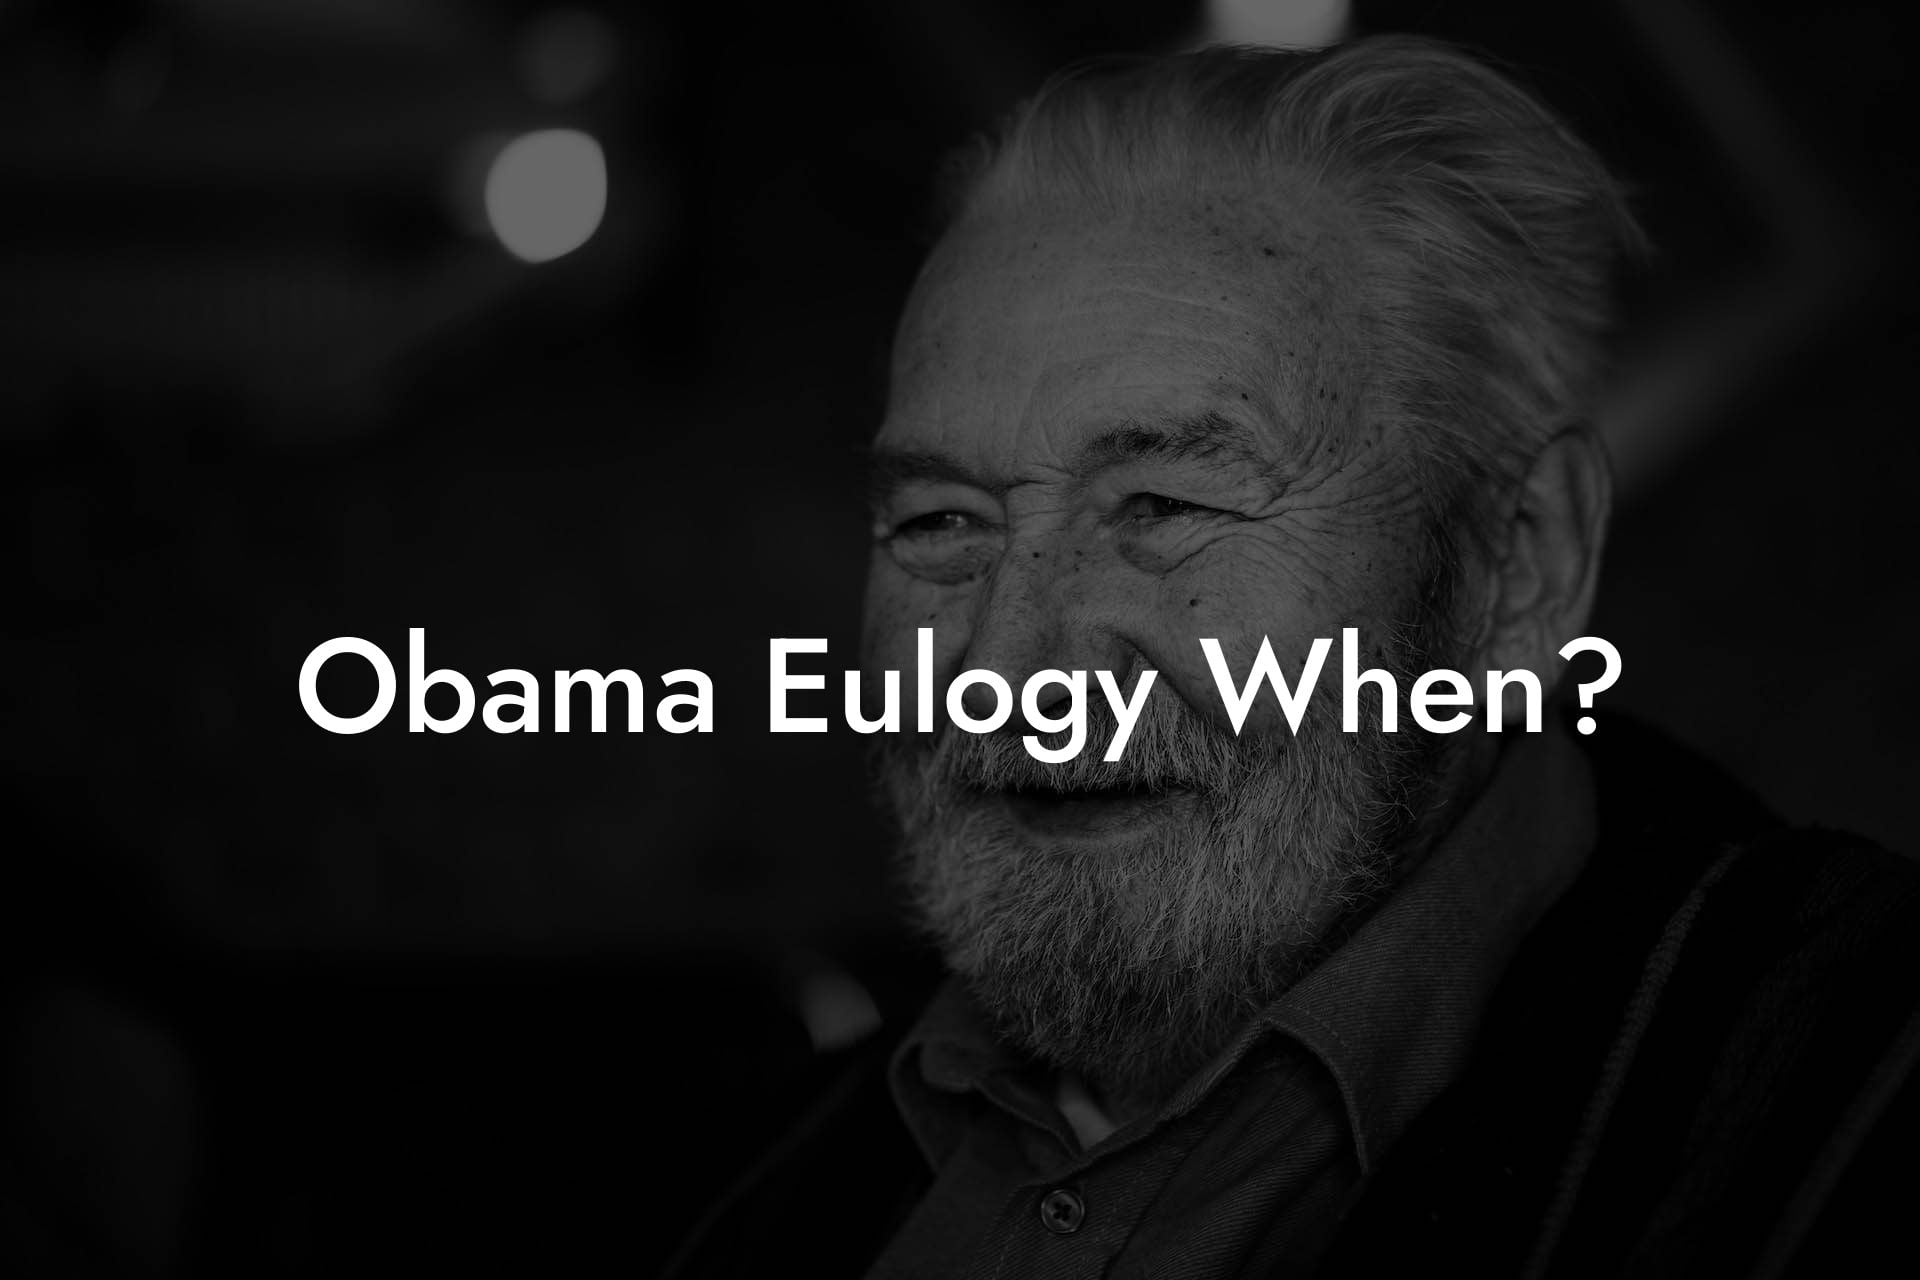 Obama Eulogy When?